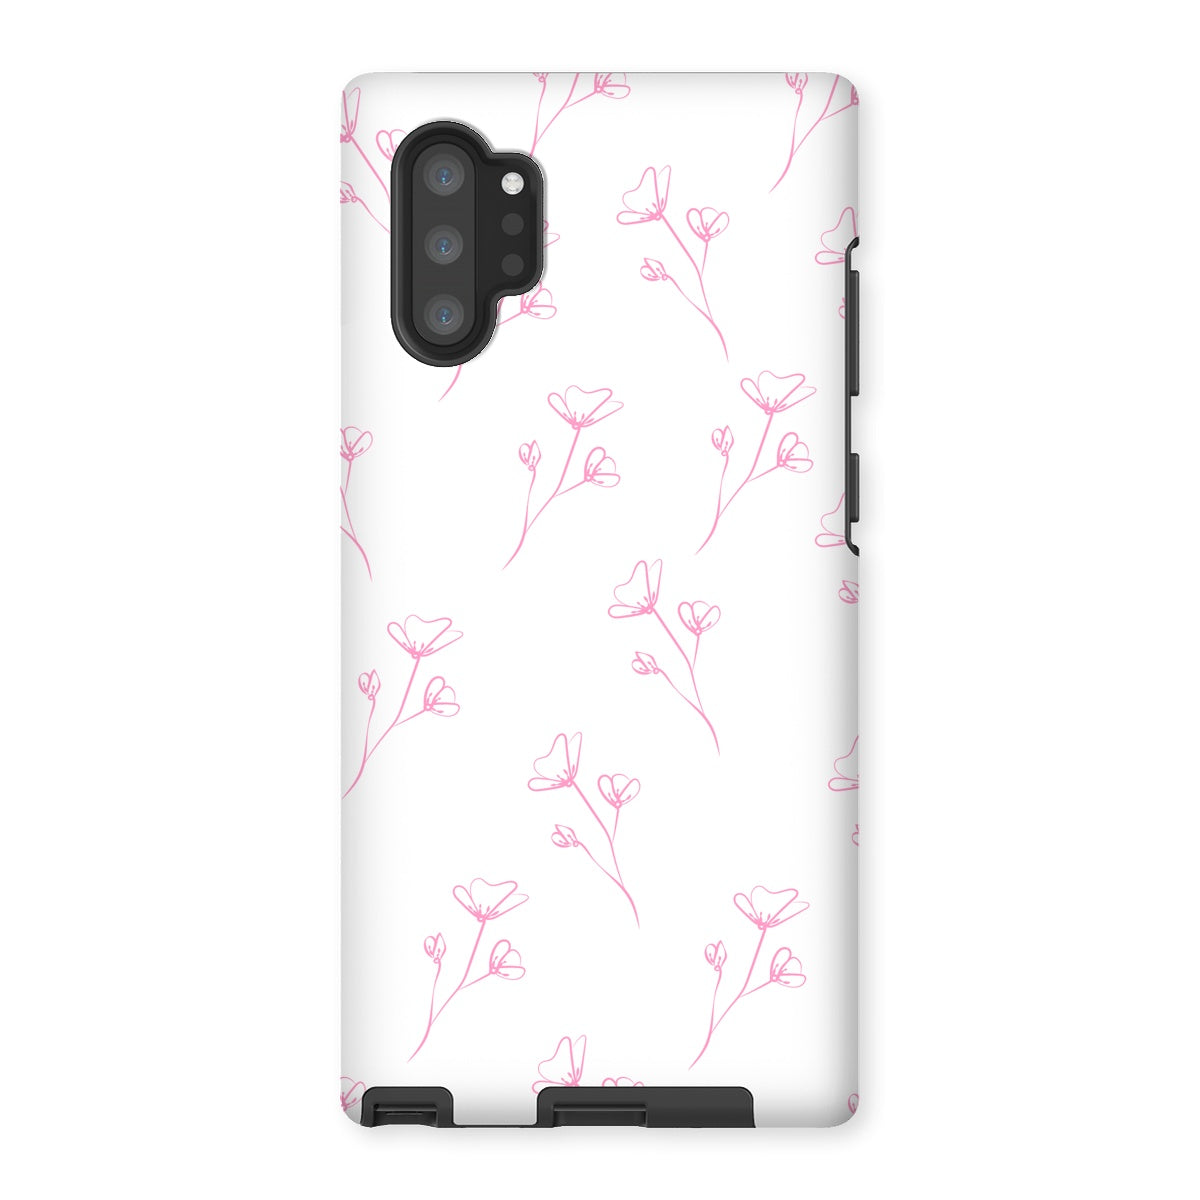 Flower Phone Case